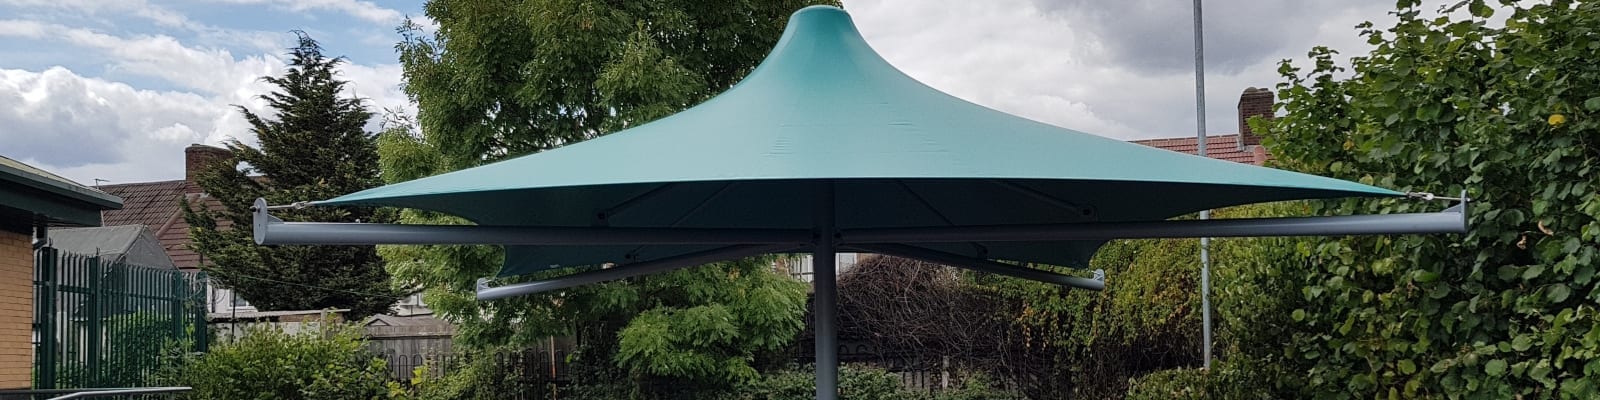 Sydney Russell School Add Green Umbrella Canopy